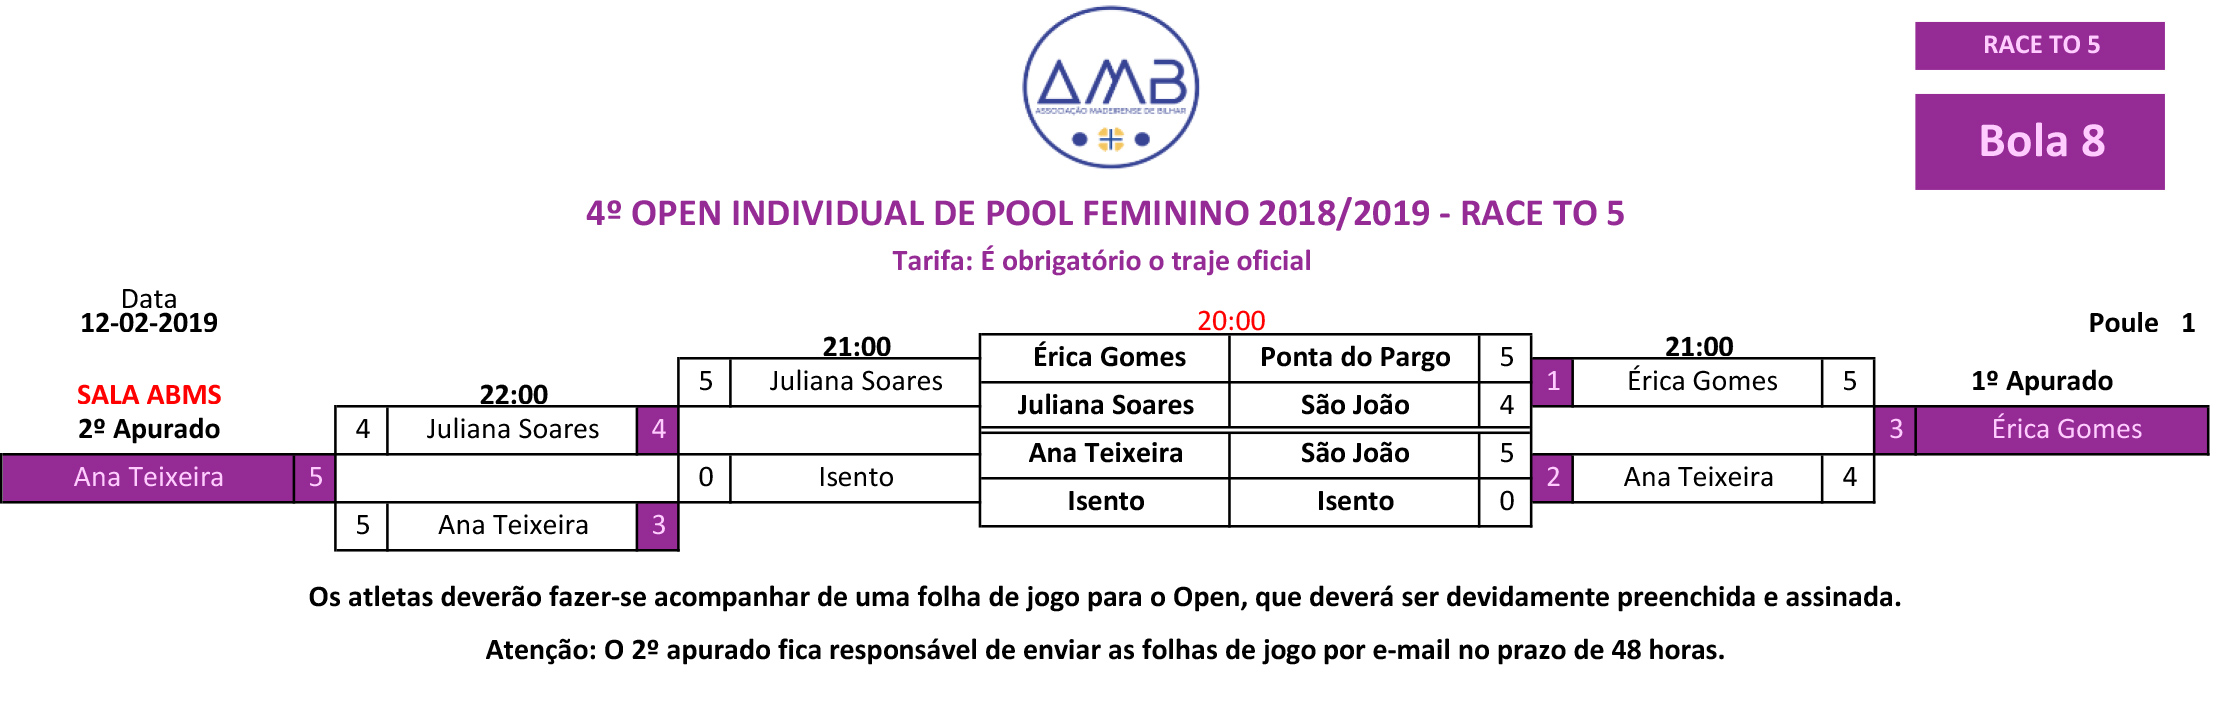 4º OPEN INDIVIDUAL DE POOL FEMININO 2018 - 2019 1 fase